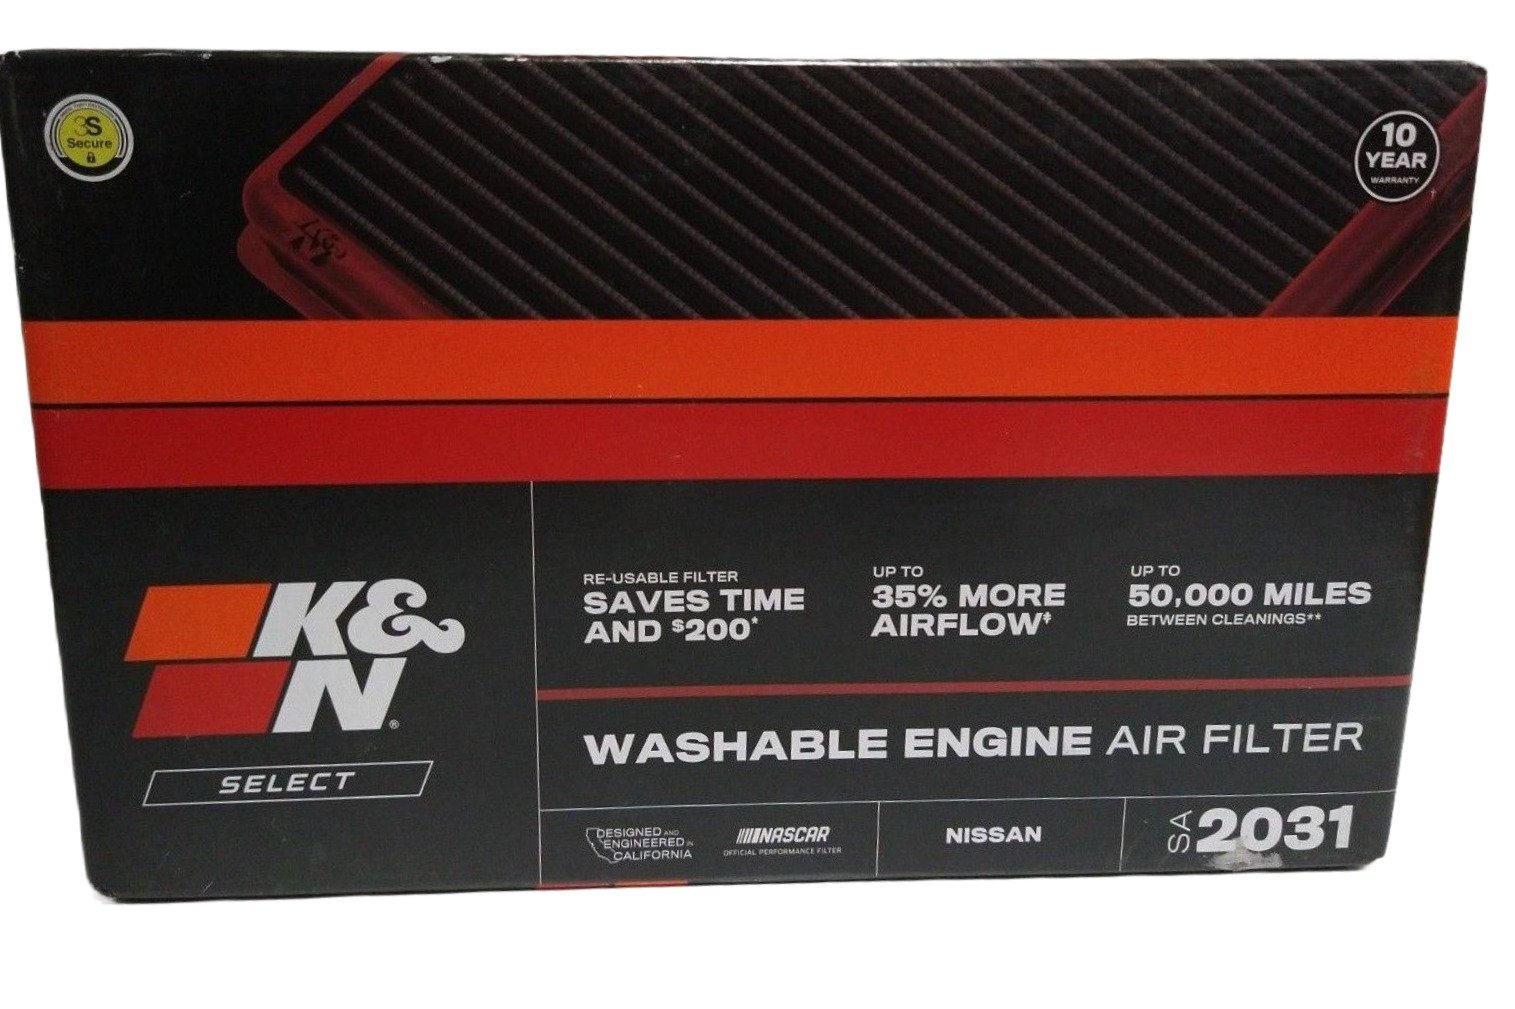 K & N Washable Engine Air Filter SA 2031 - For 1982-2020 Nissan Maxima